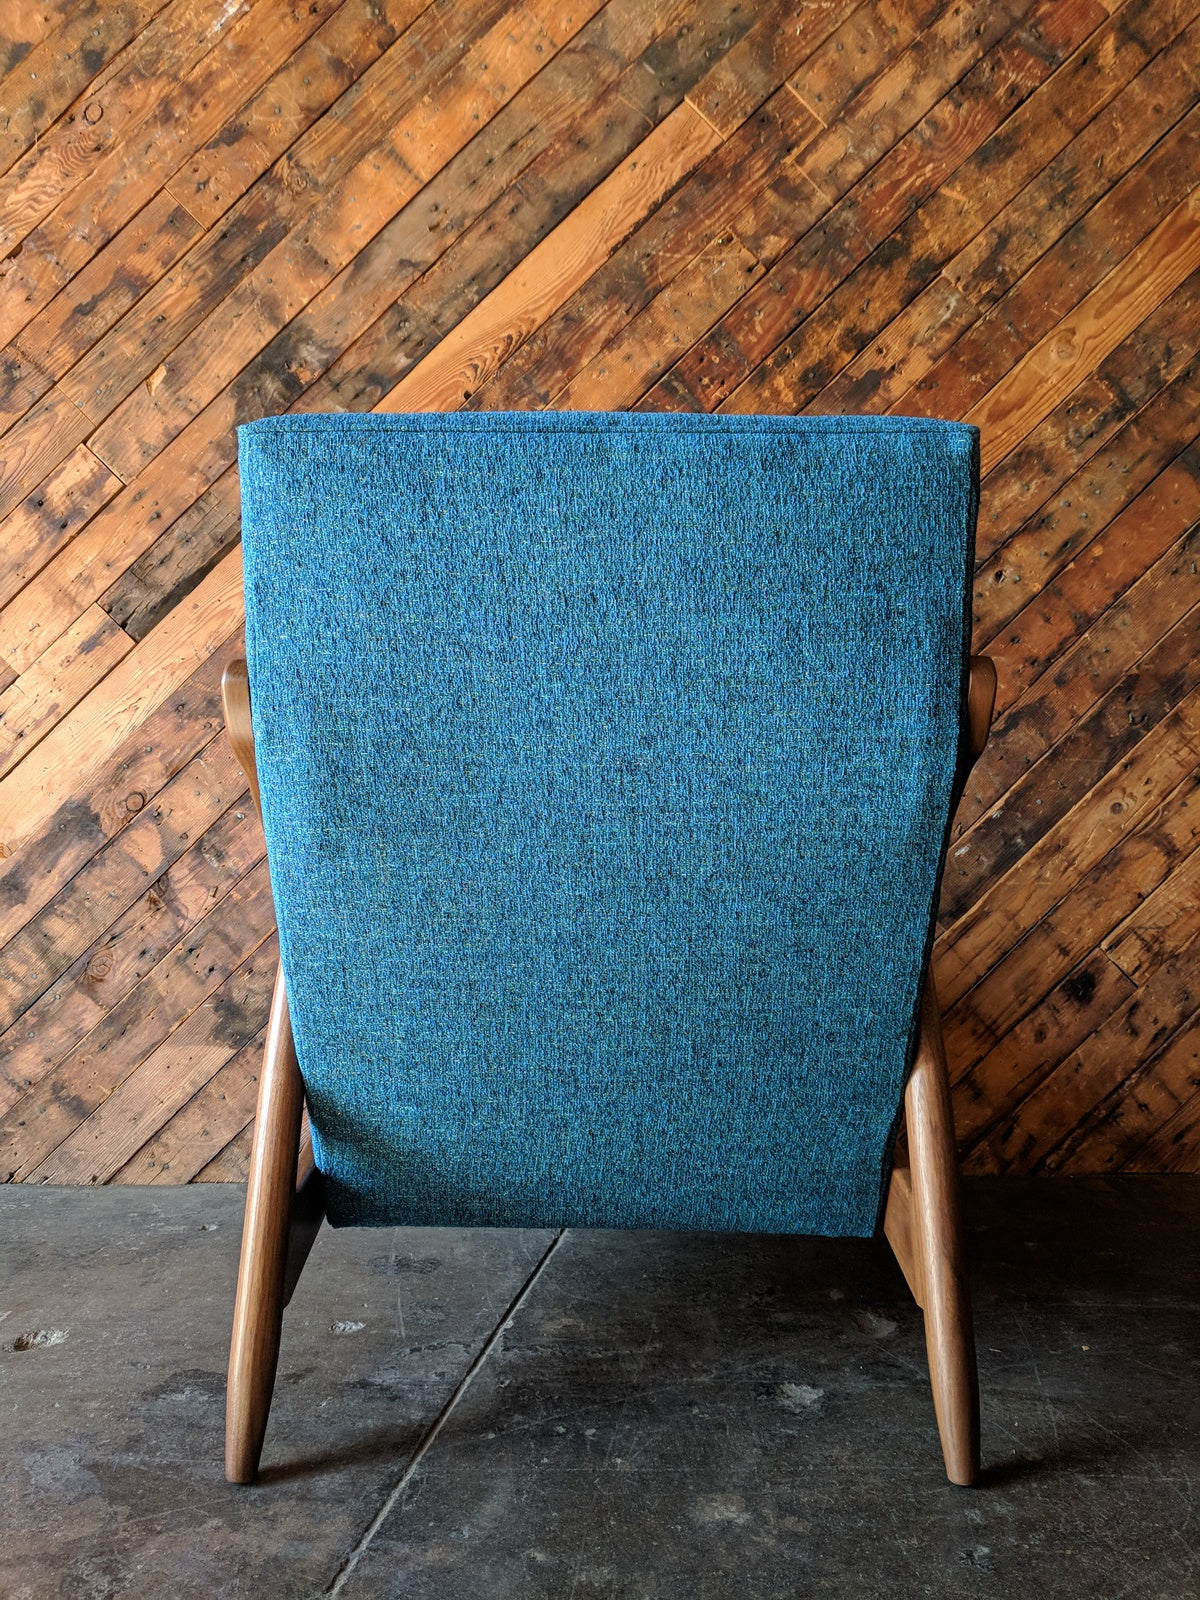 Custom Danish Mid Century Style Lounge Chair